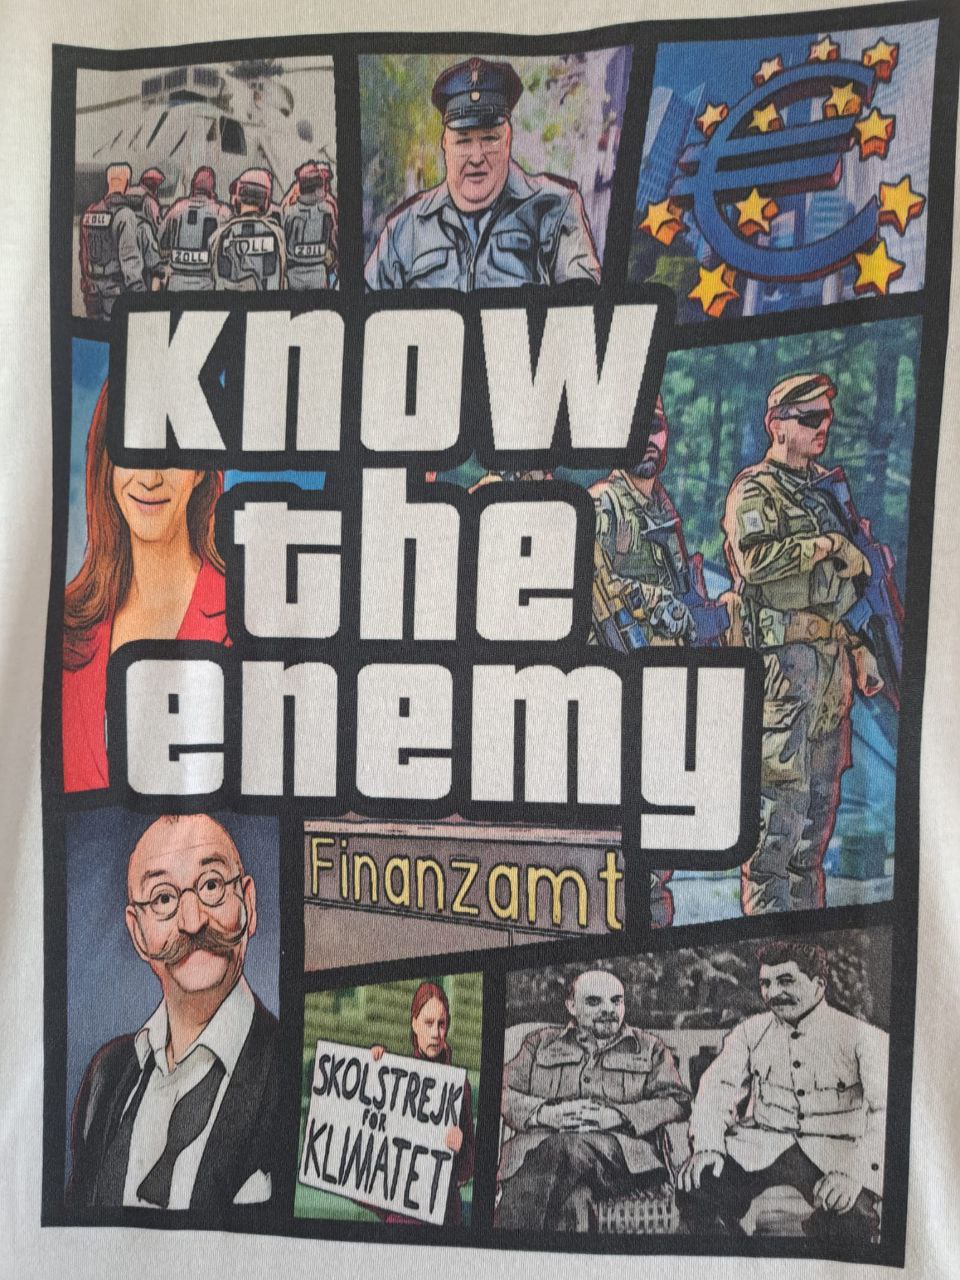 Know the enemy Shirt weiß (GTA-Style)